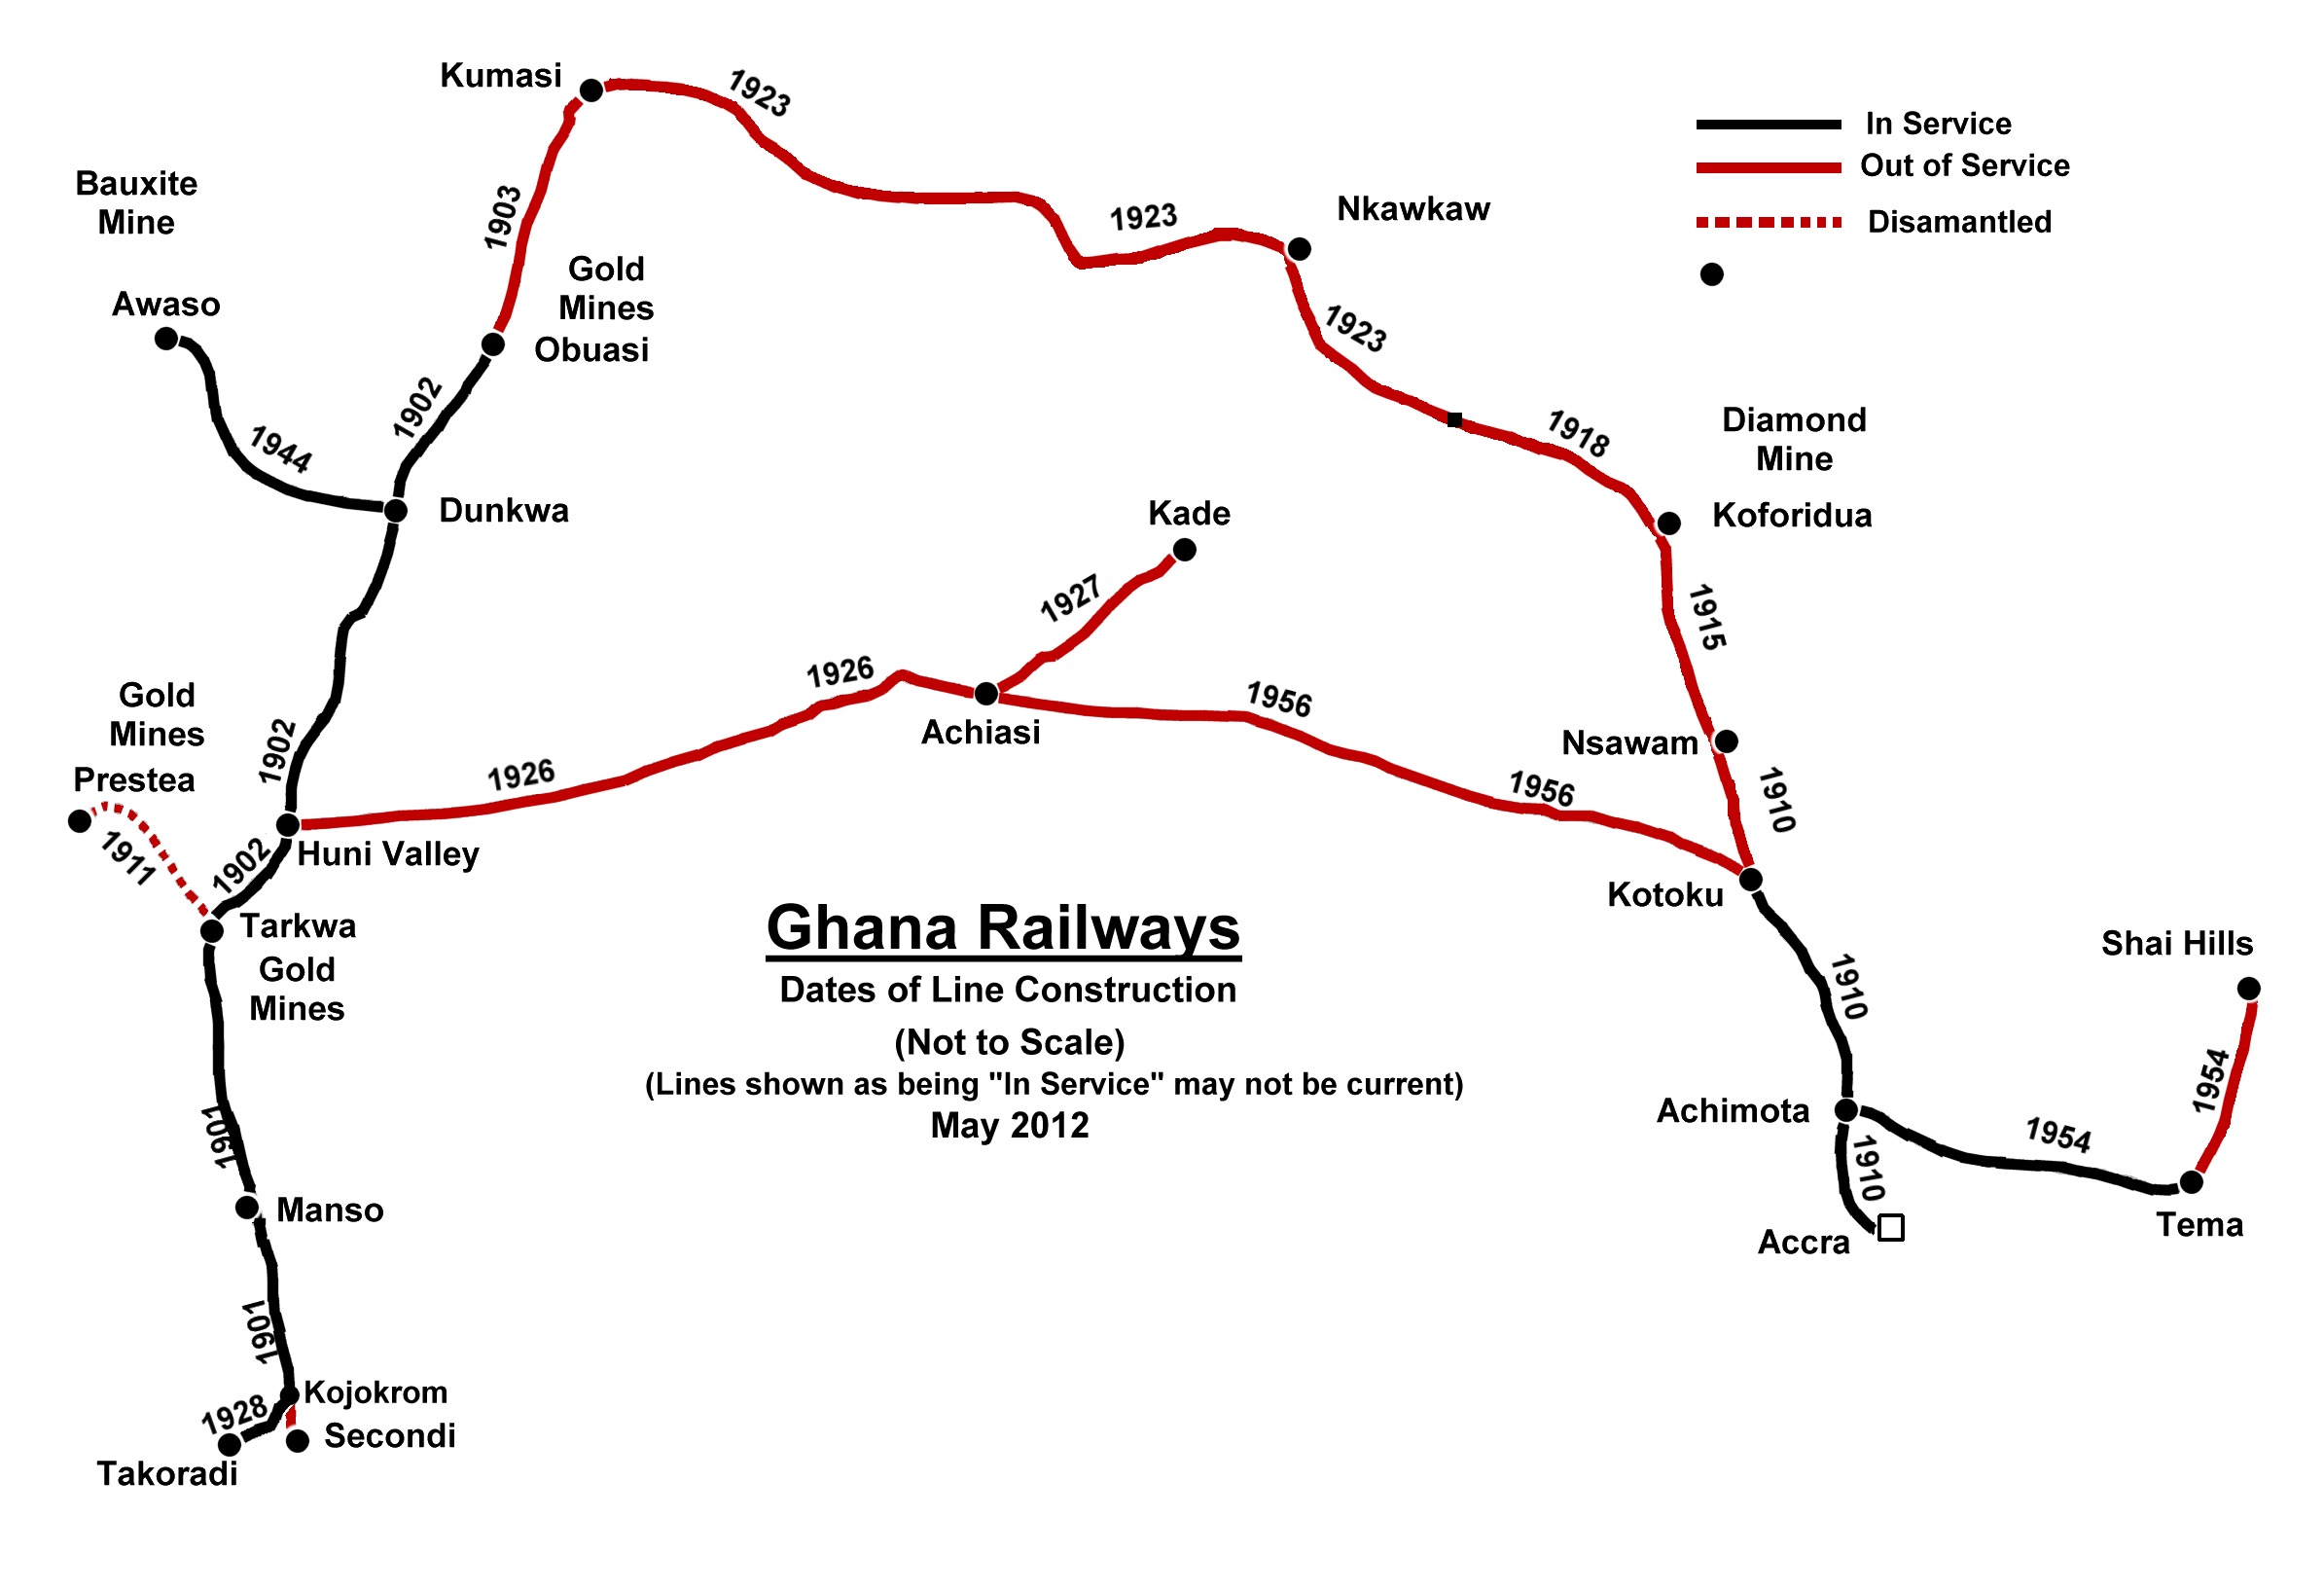 Railway network of Ghana showing dates of dates of constructed railway lines (Railwaybob | Wikimedia Commons)